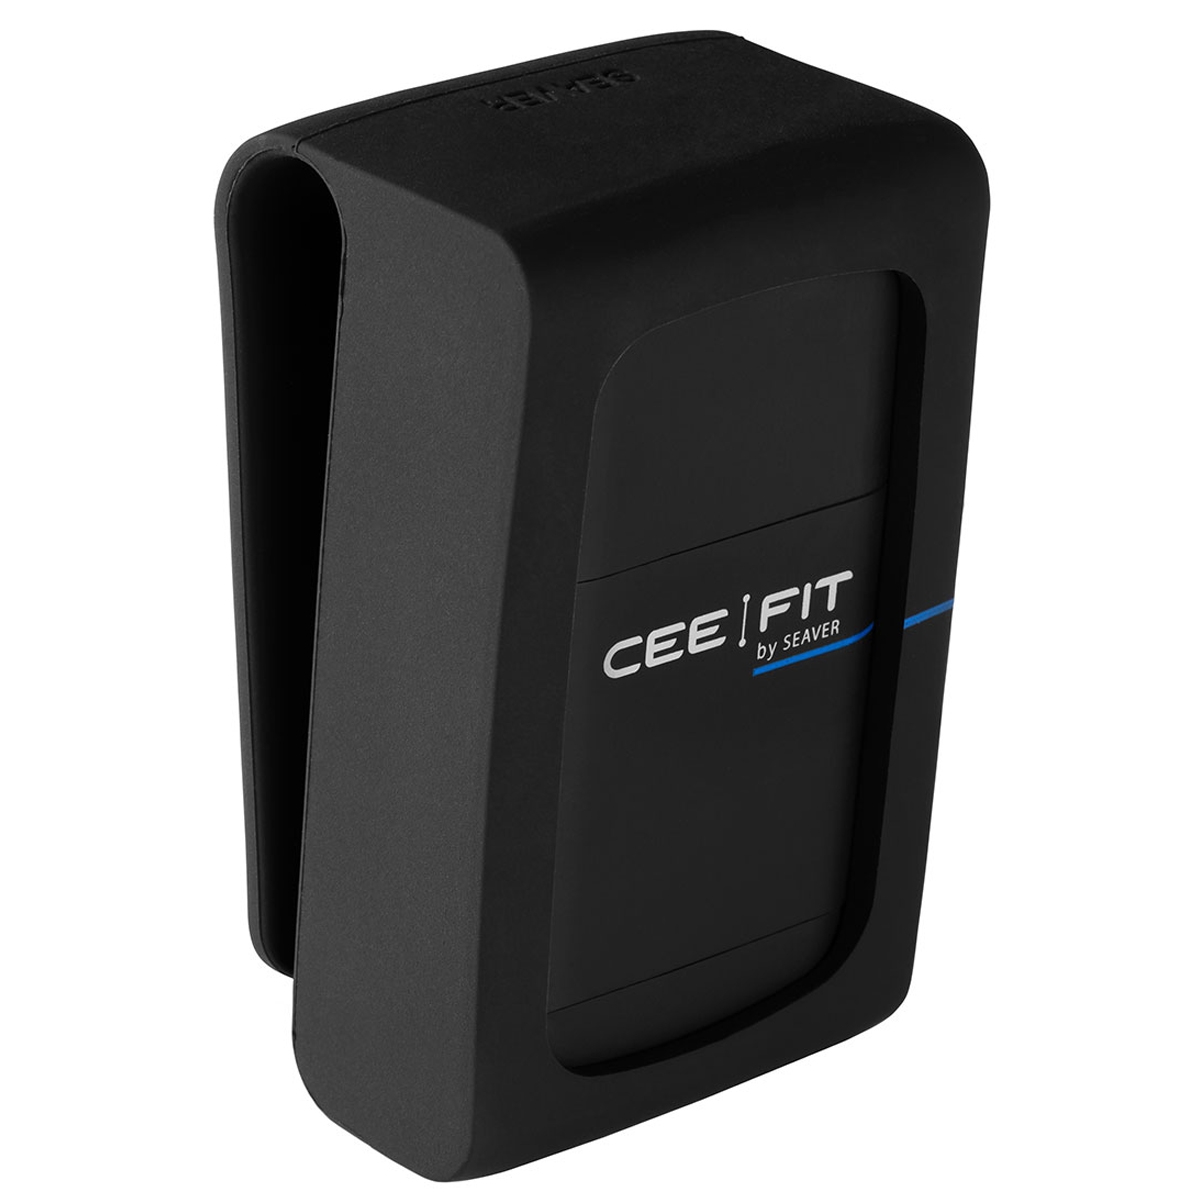 CEEFIT-sensor